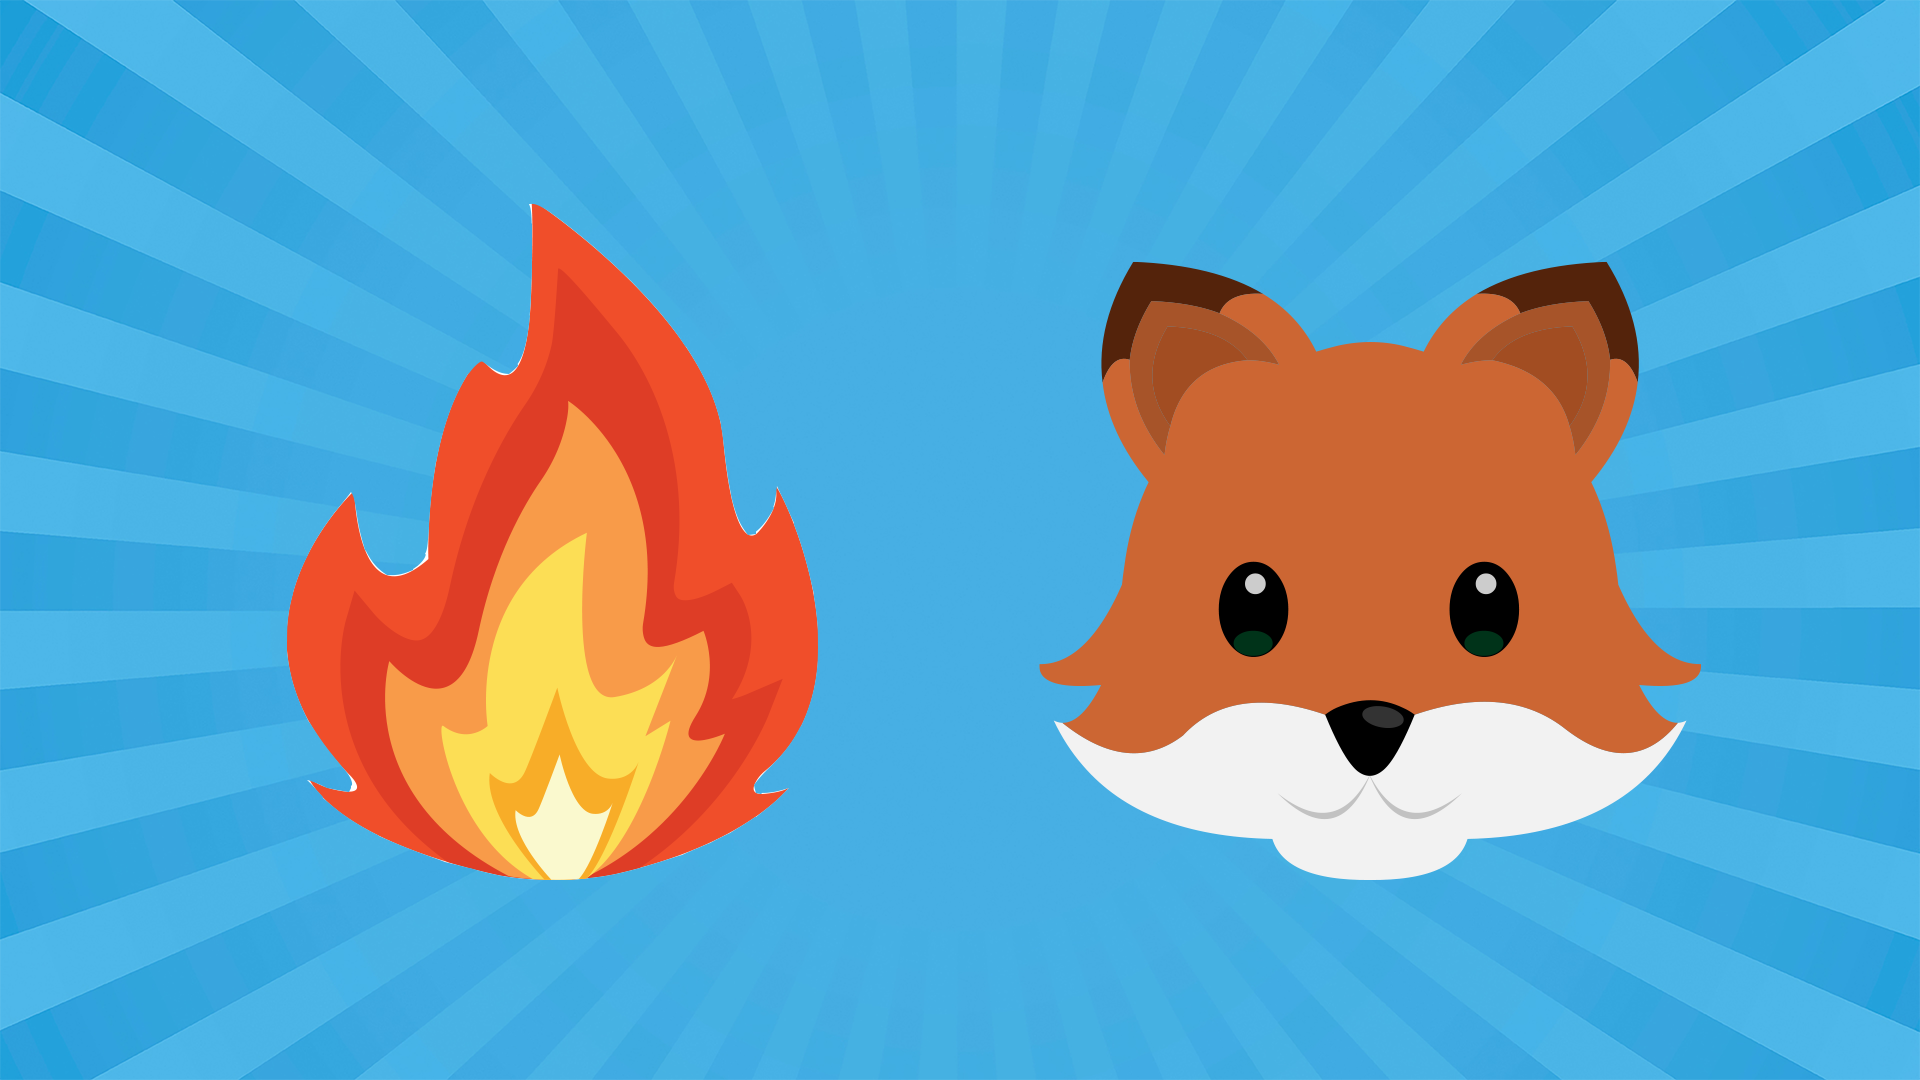 A fire and a fox emoji